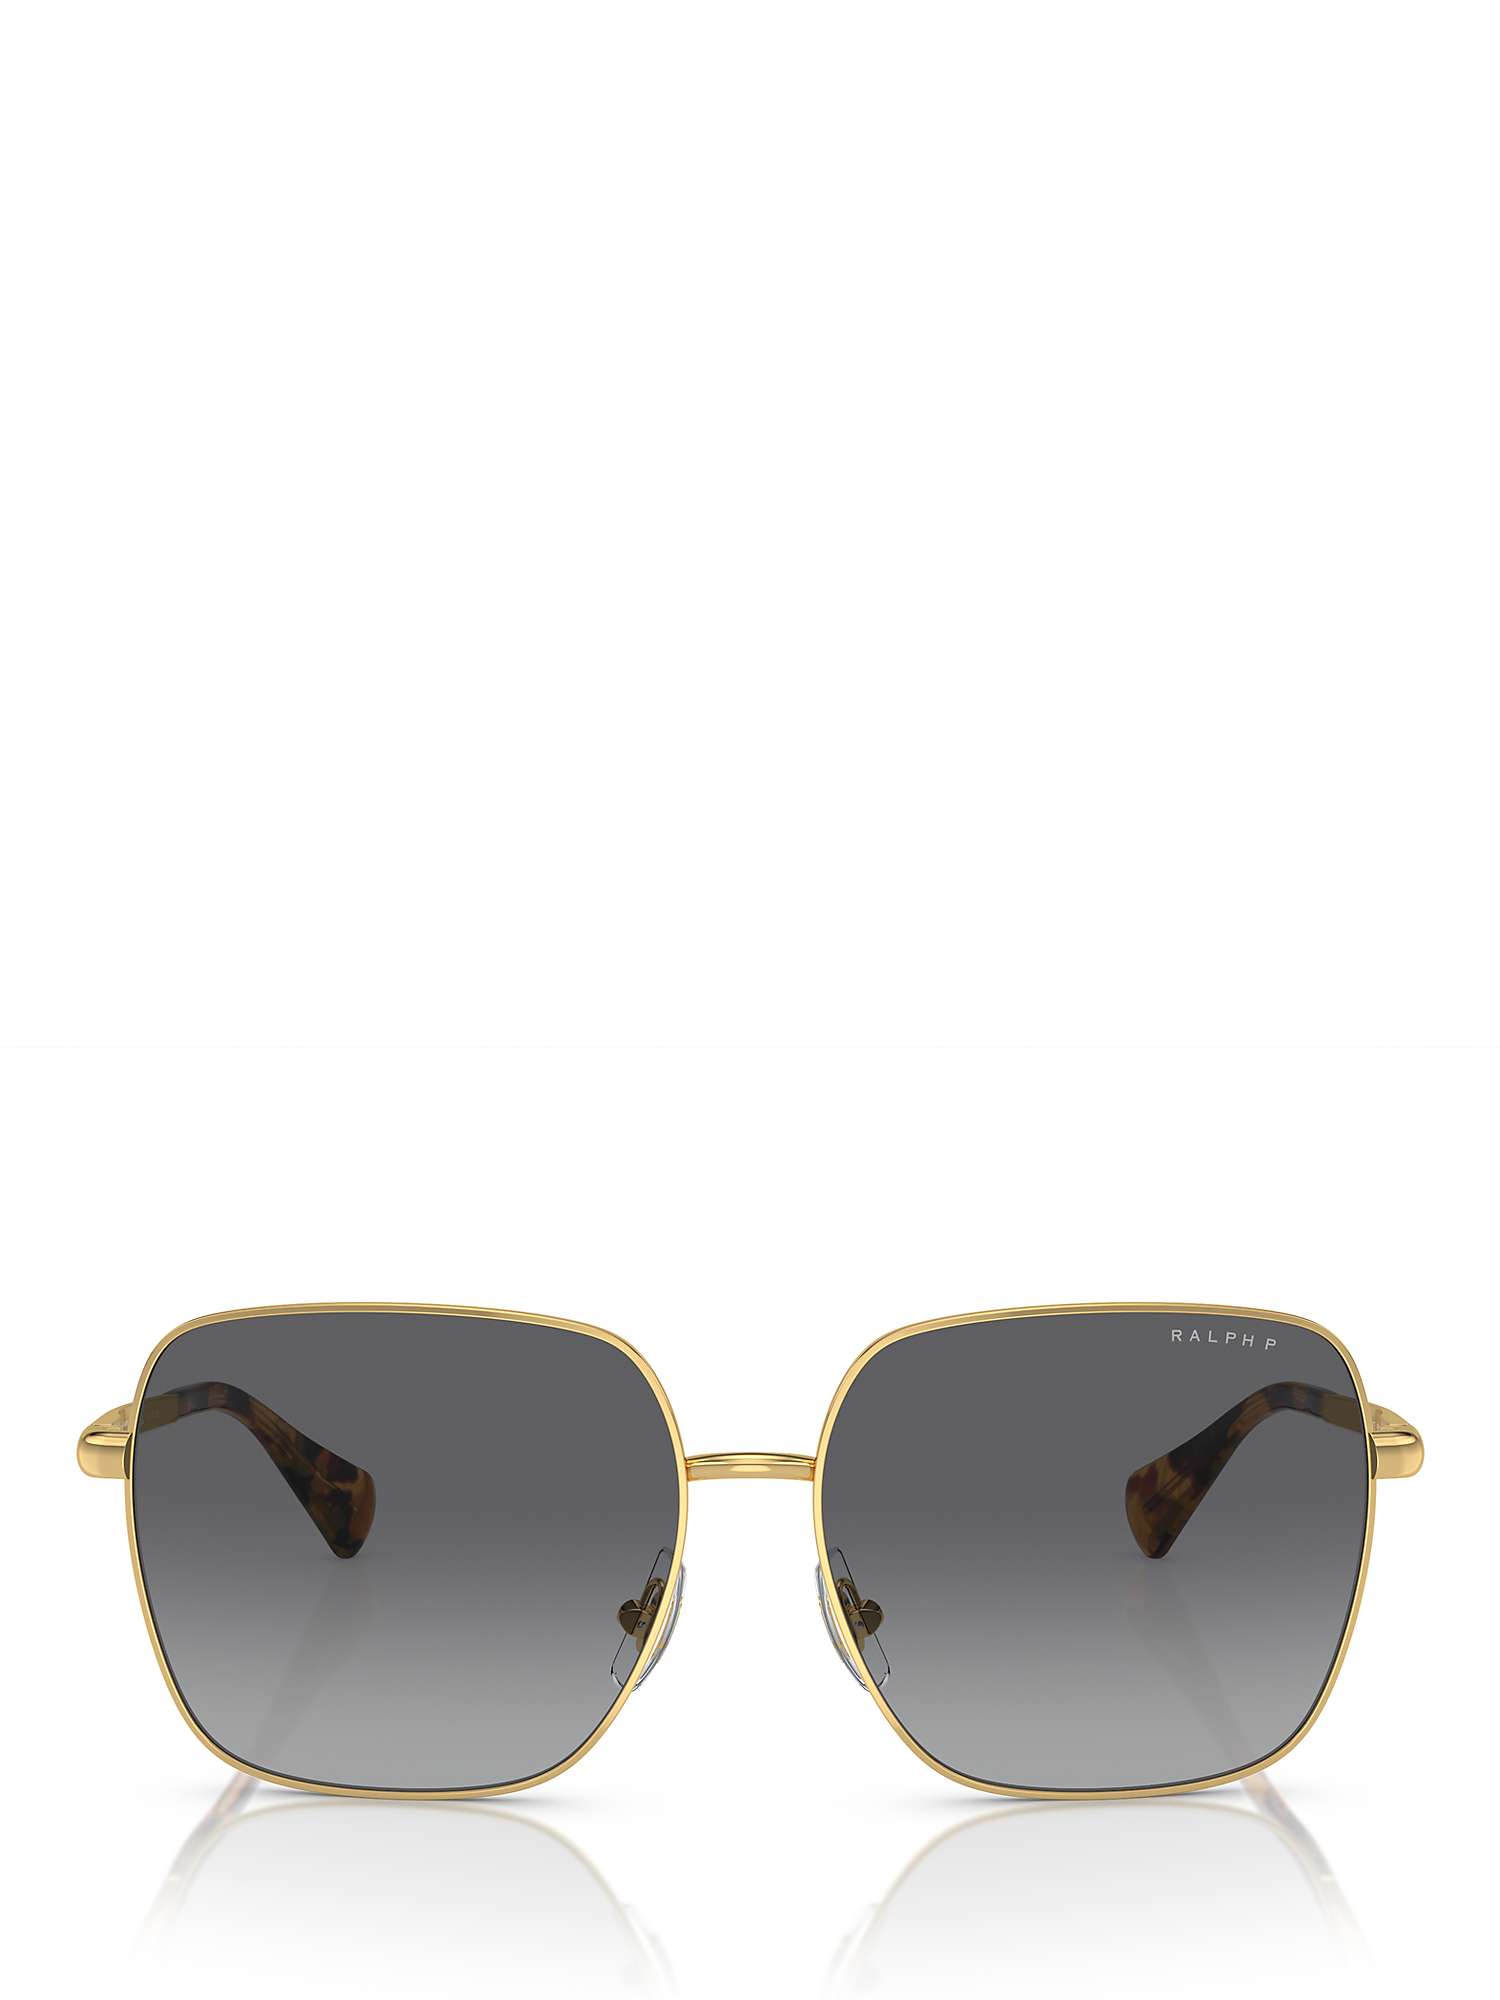 Buy Ralph RA4142 Women's Square Sunglasses, Shiny Gold Online at johnlewis.com